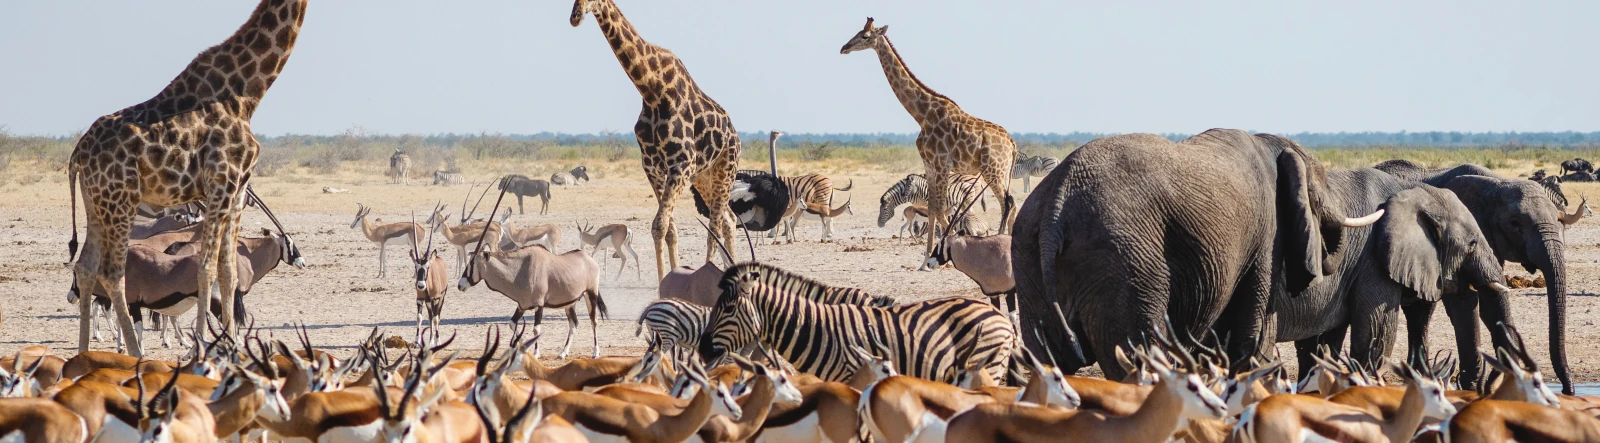 Giraffes, elephants, zebras, gazelles and ostriches in the African savanna